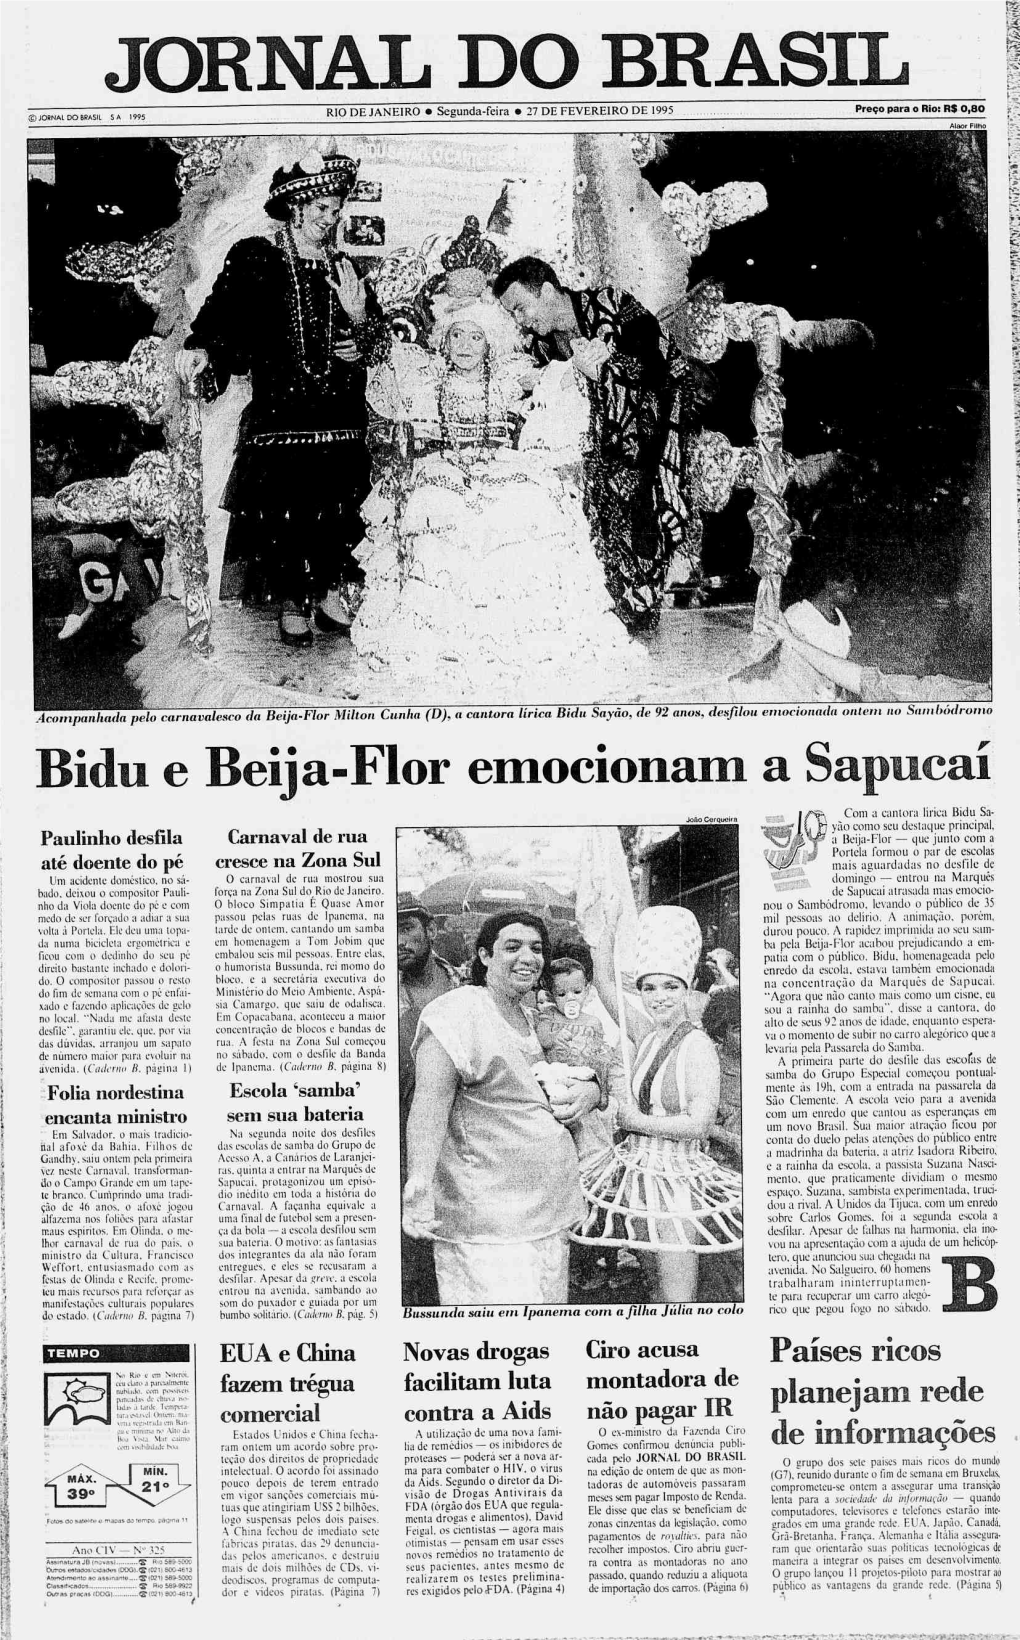 Jobnal Do Brasil © Jornal Do Brasil Sa 1995 Rio De Janeiro